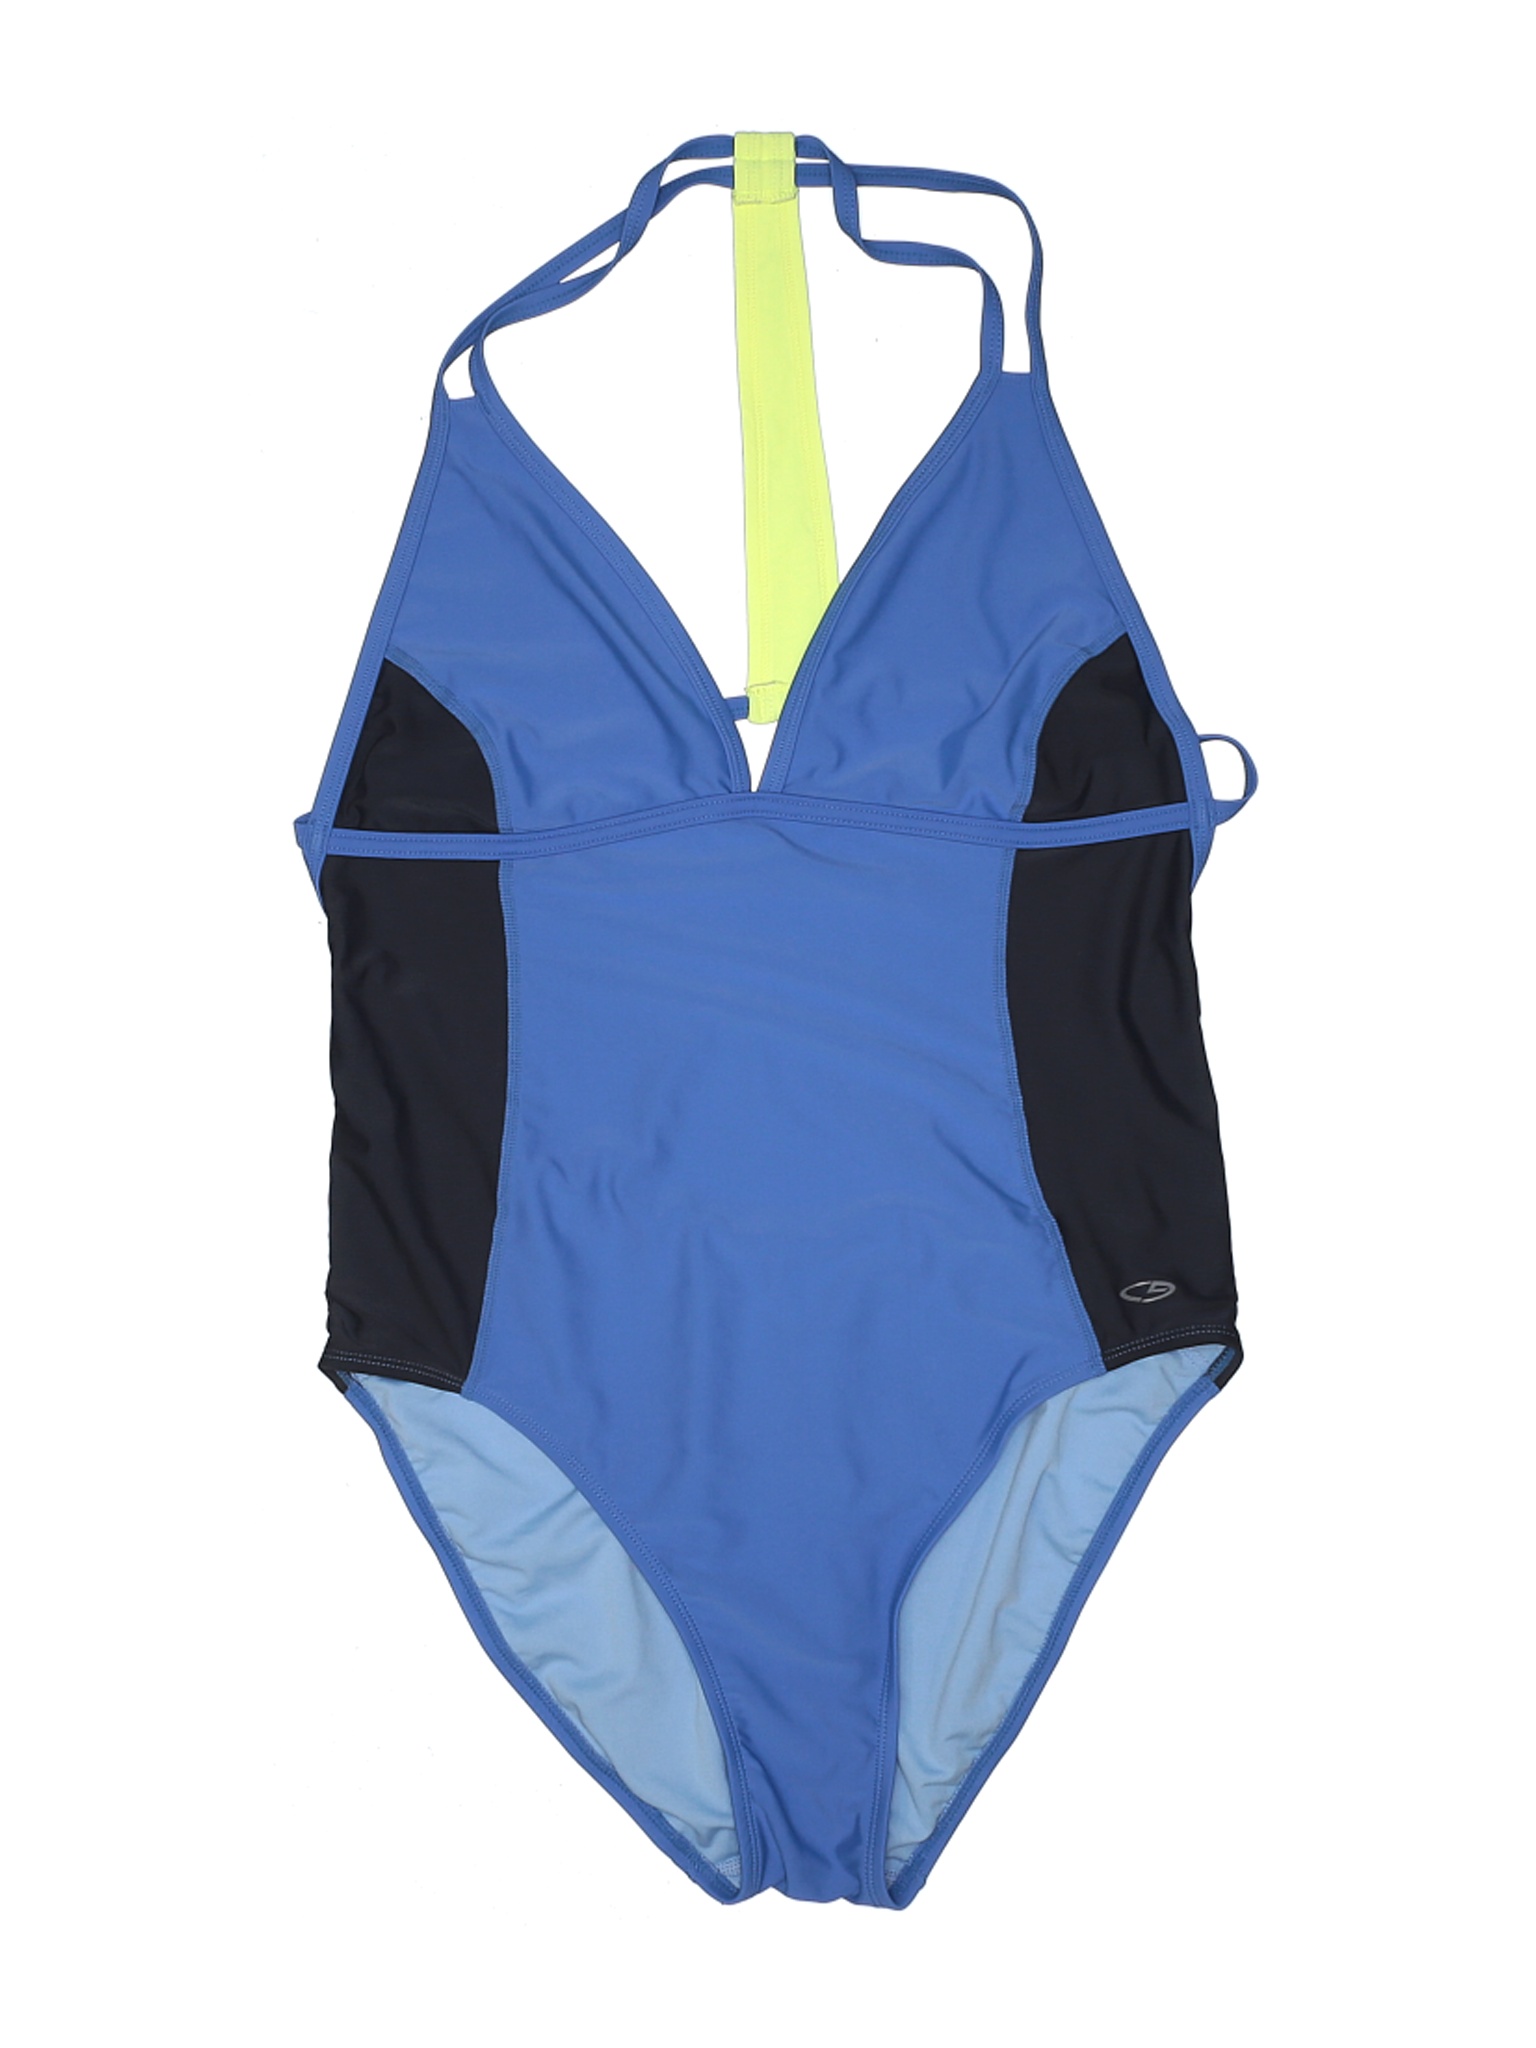 C9 By Champion Women Blue One Piece Swimsuit XL | eBay